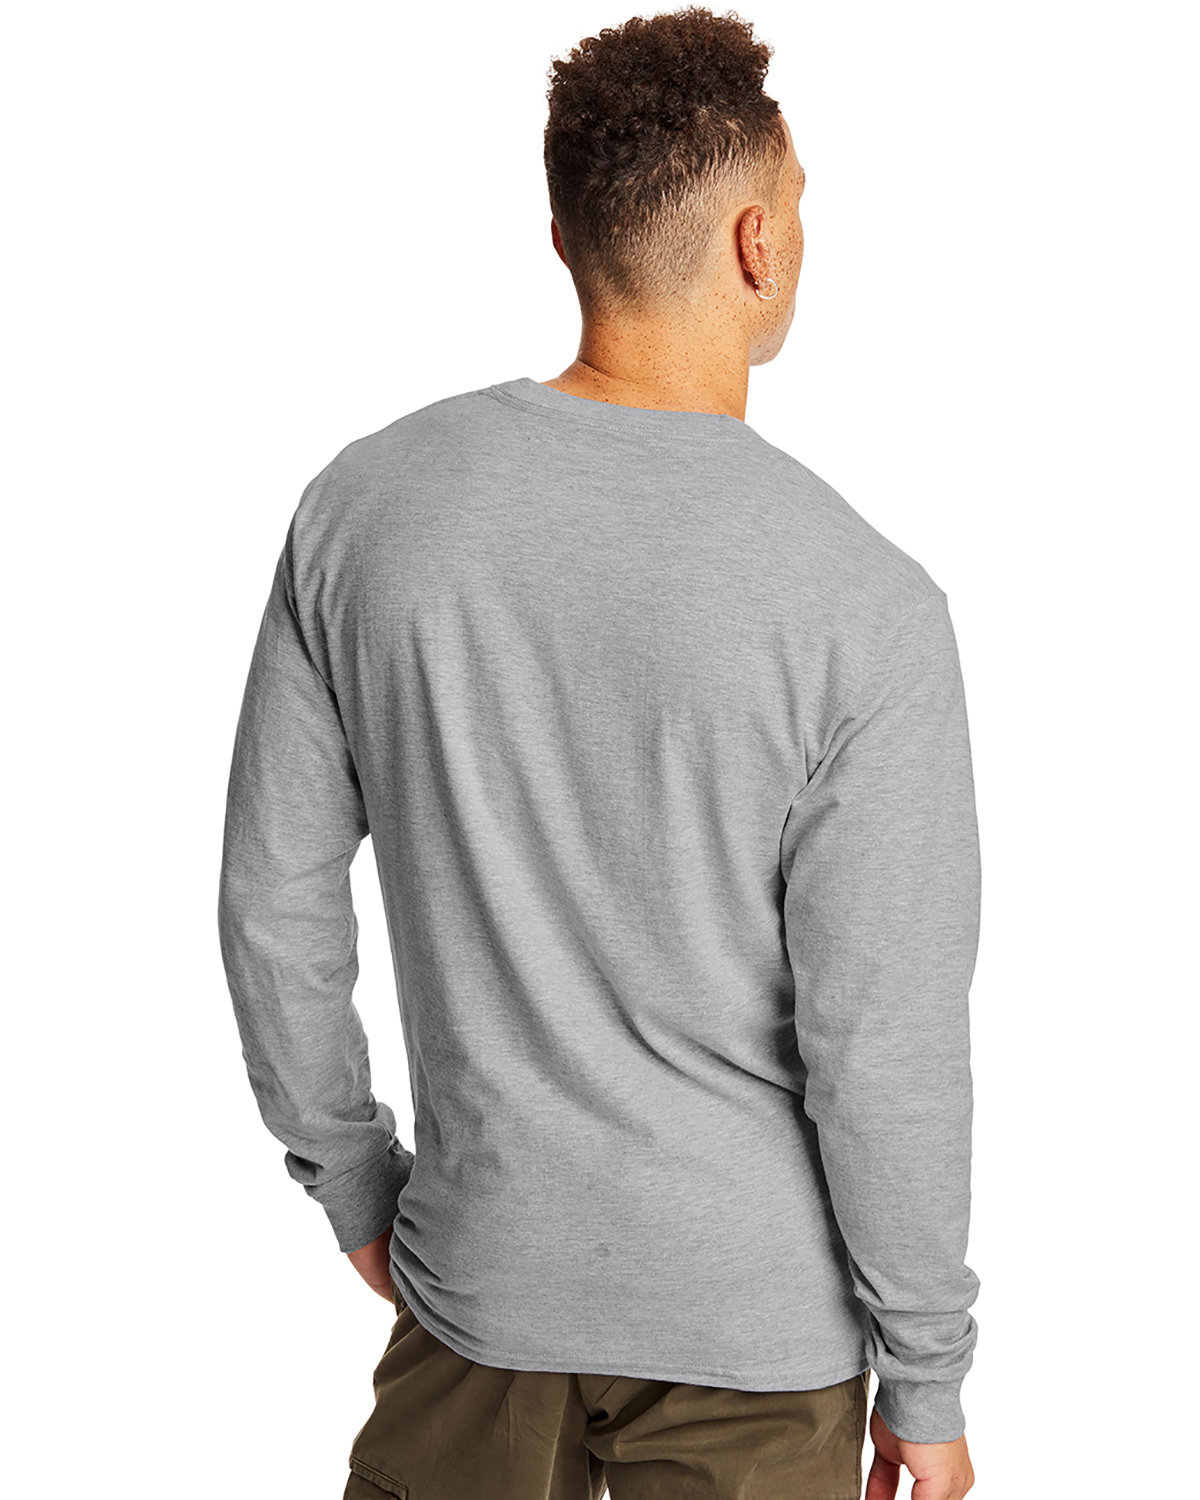 Hanes Men's 100% Cotton Long Sleeve Beefy-T® L/S Tee Shirt S-3XL 5186